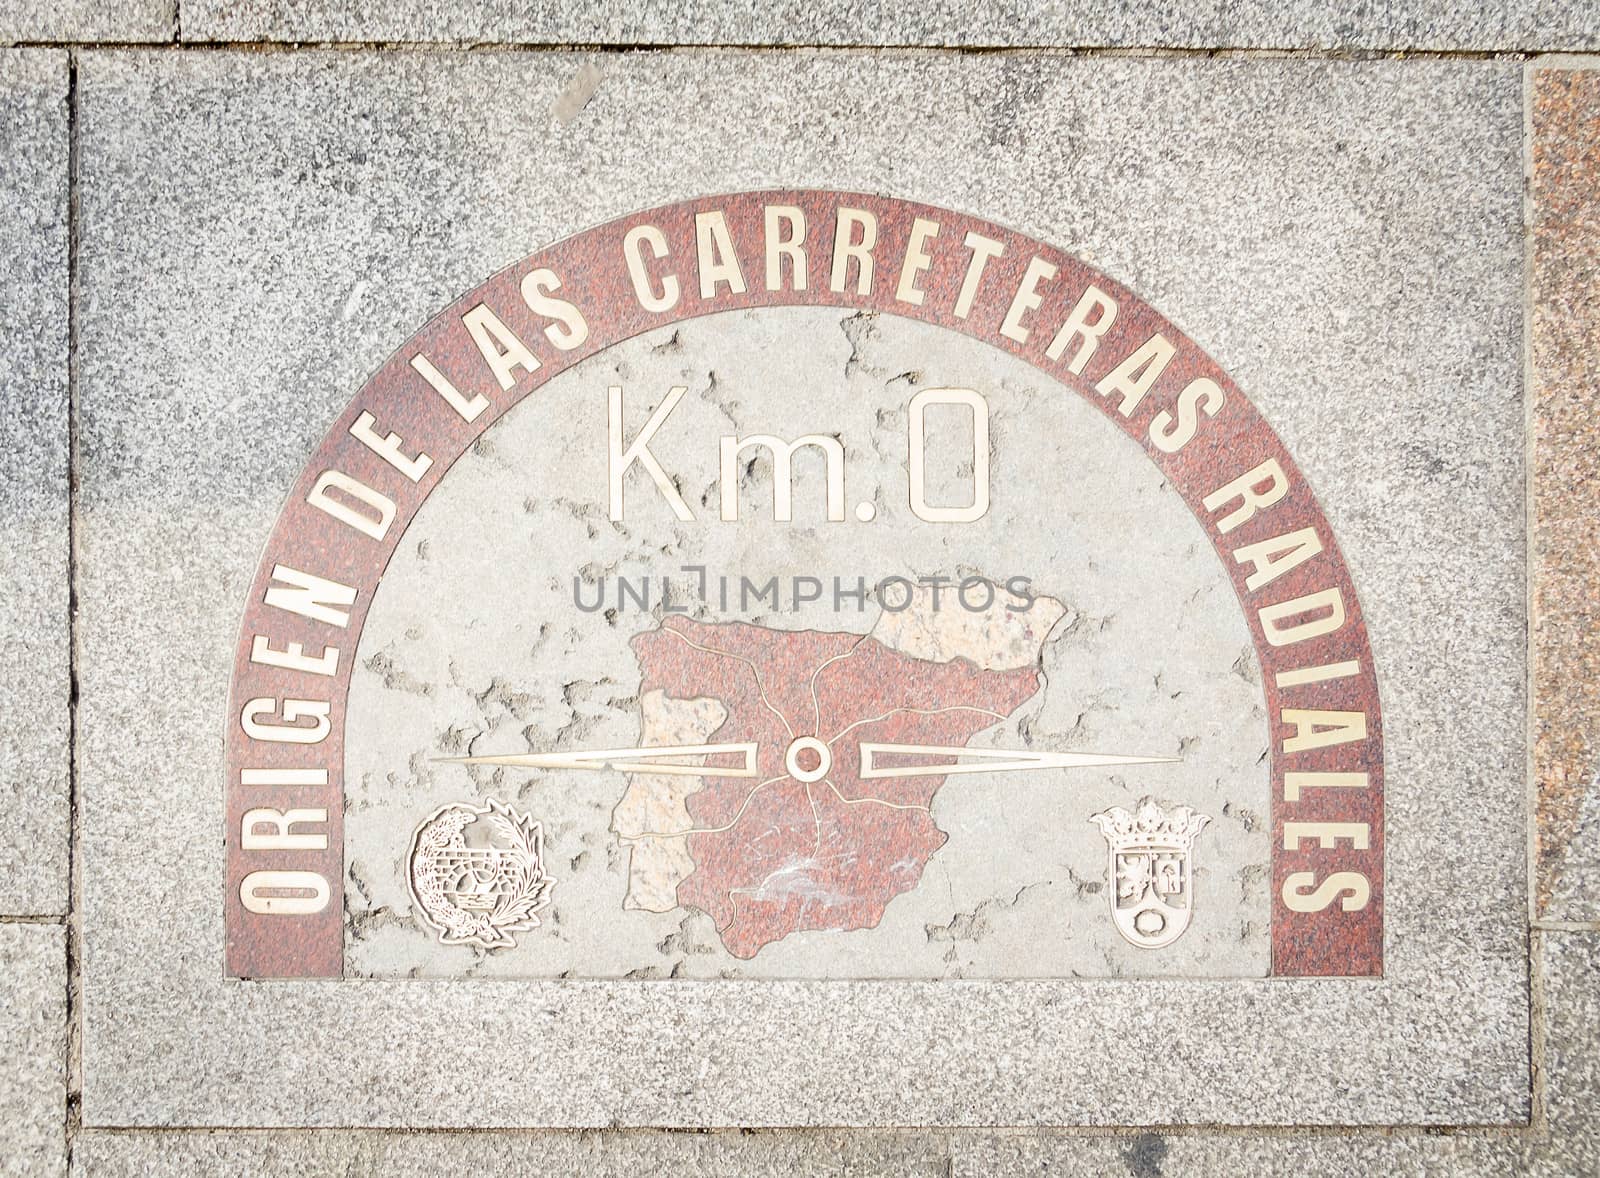 Kilometer zero point sign on the street of Puerta del Sol, in Madrid, Spain